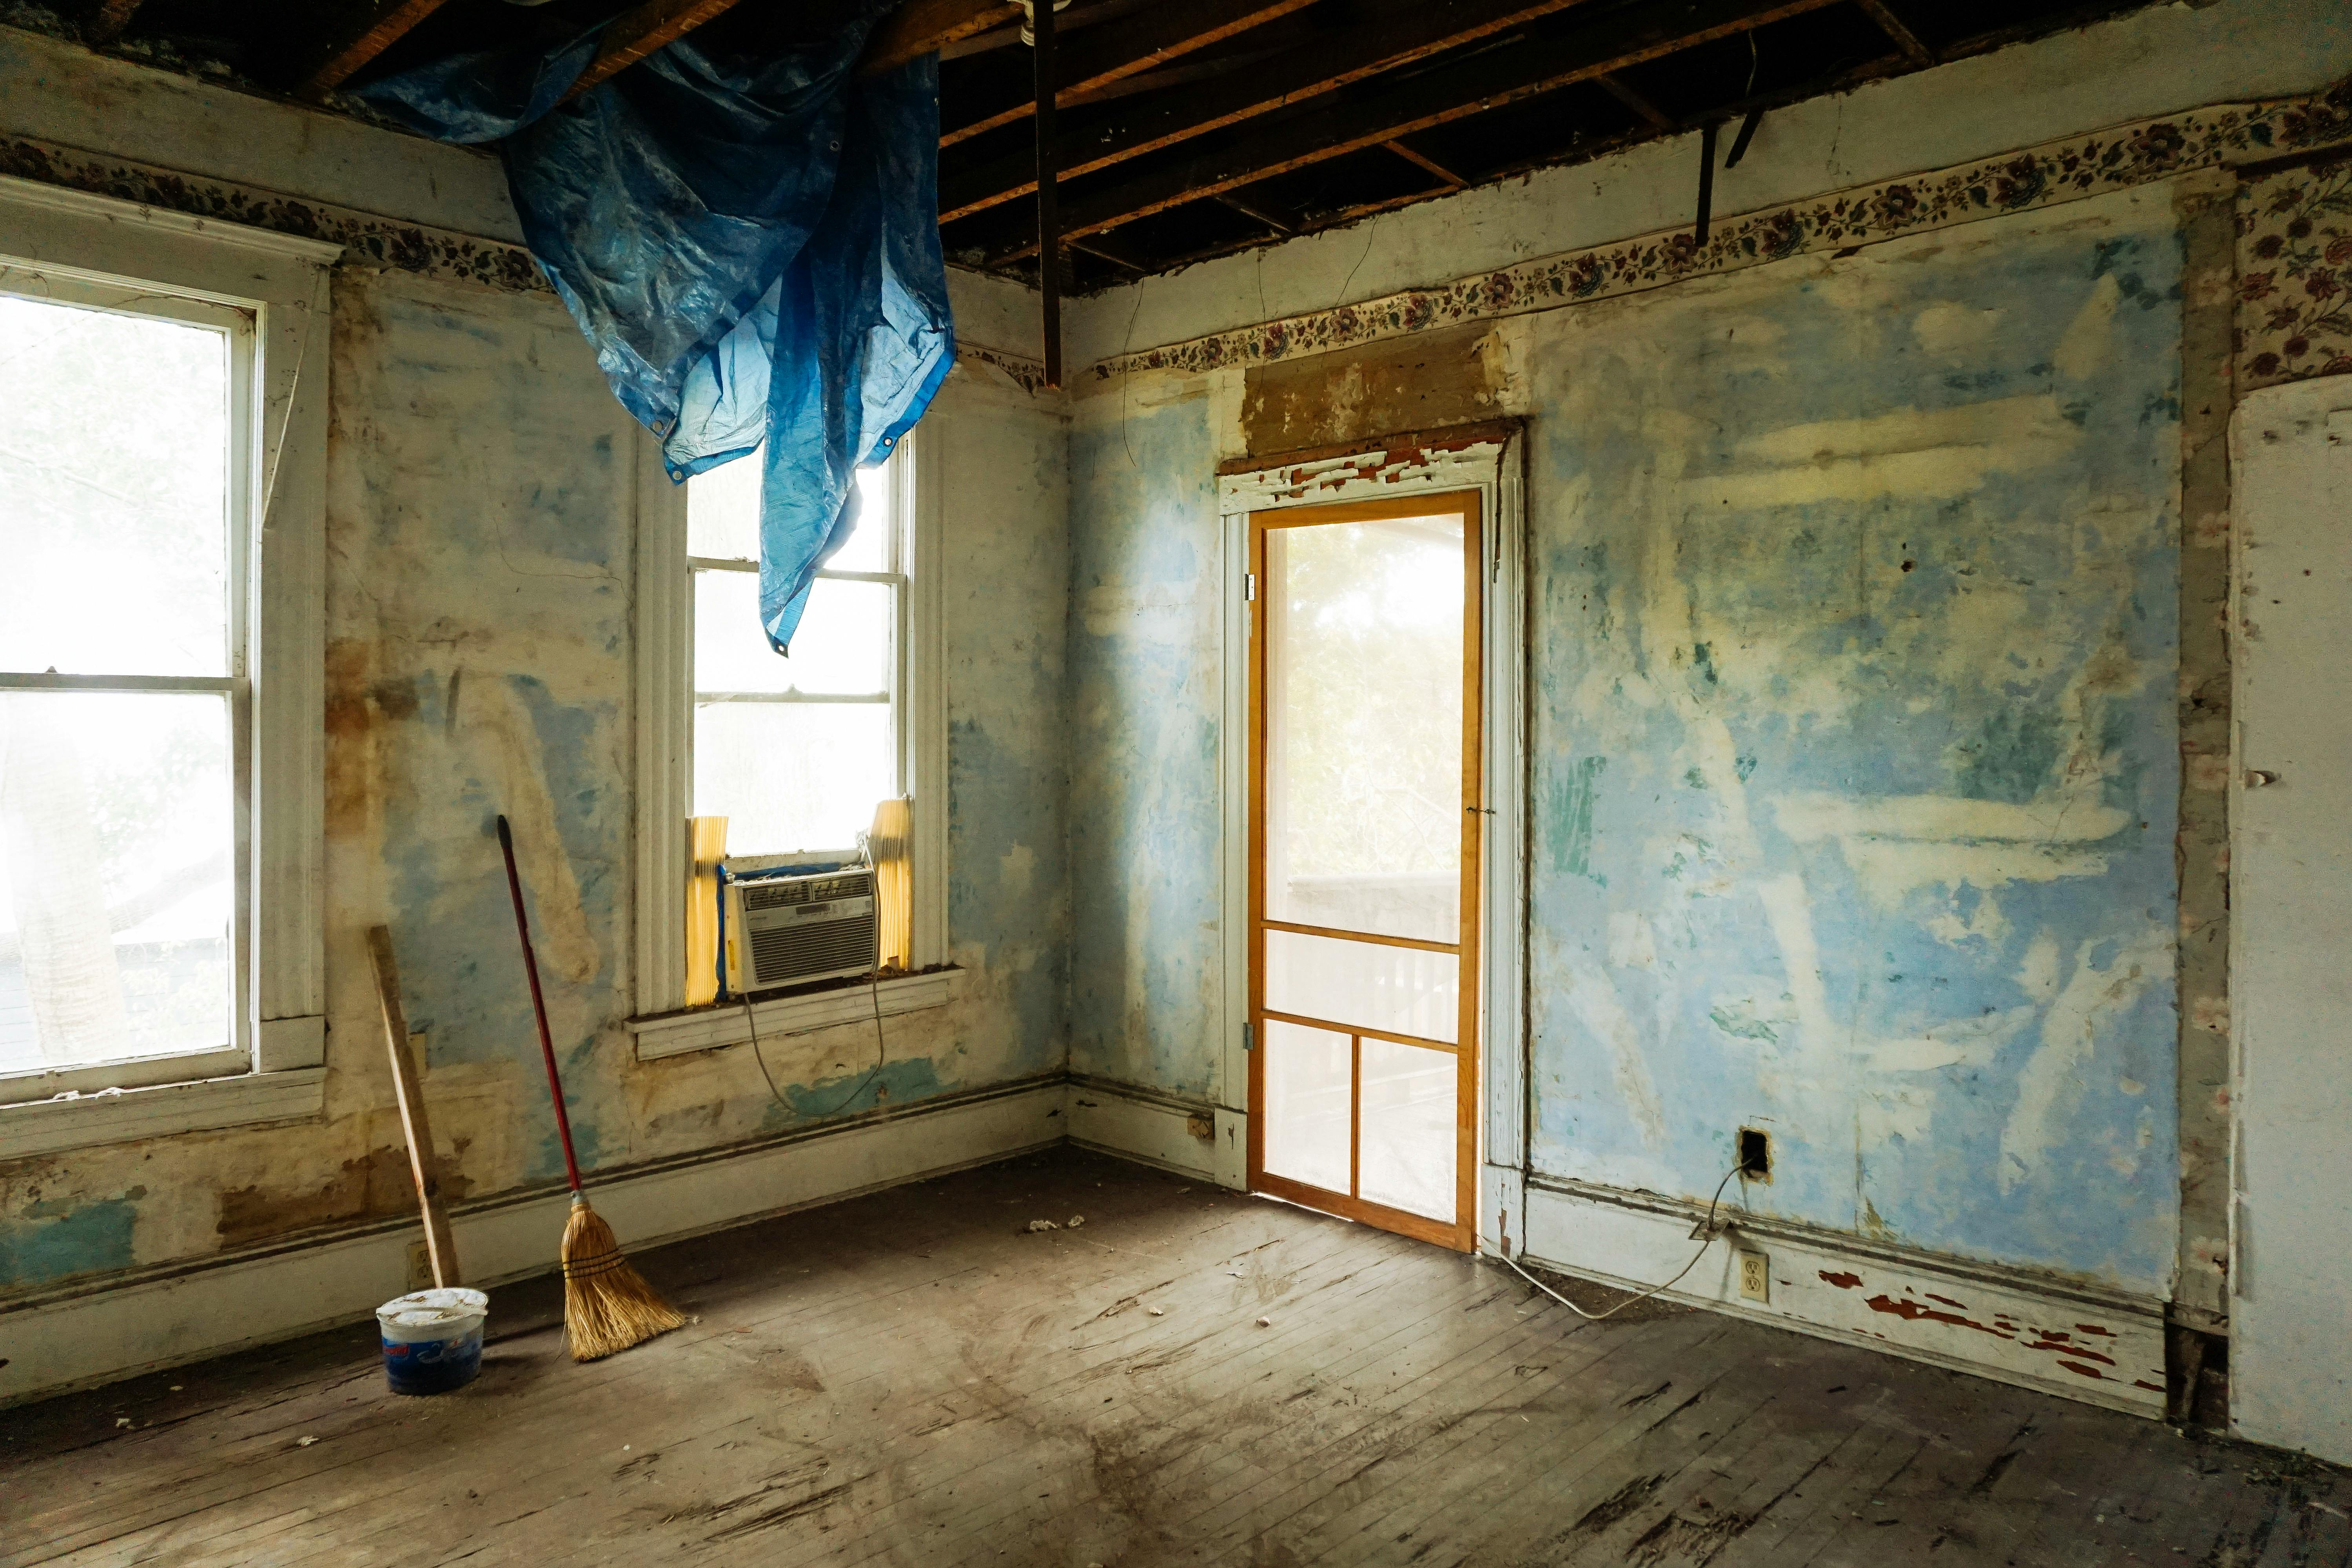 A room under construction | Source: Pexels